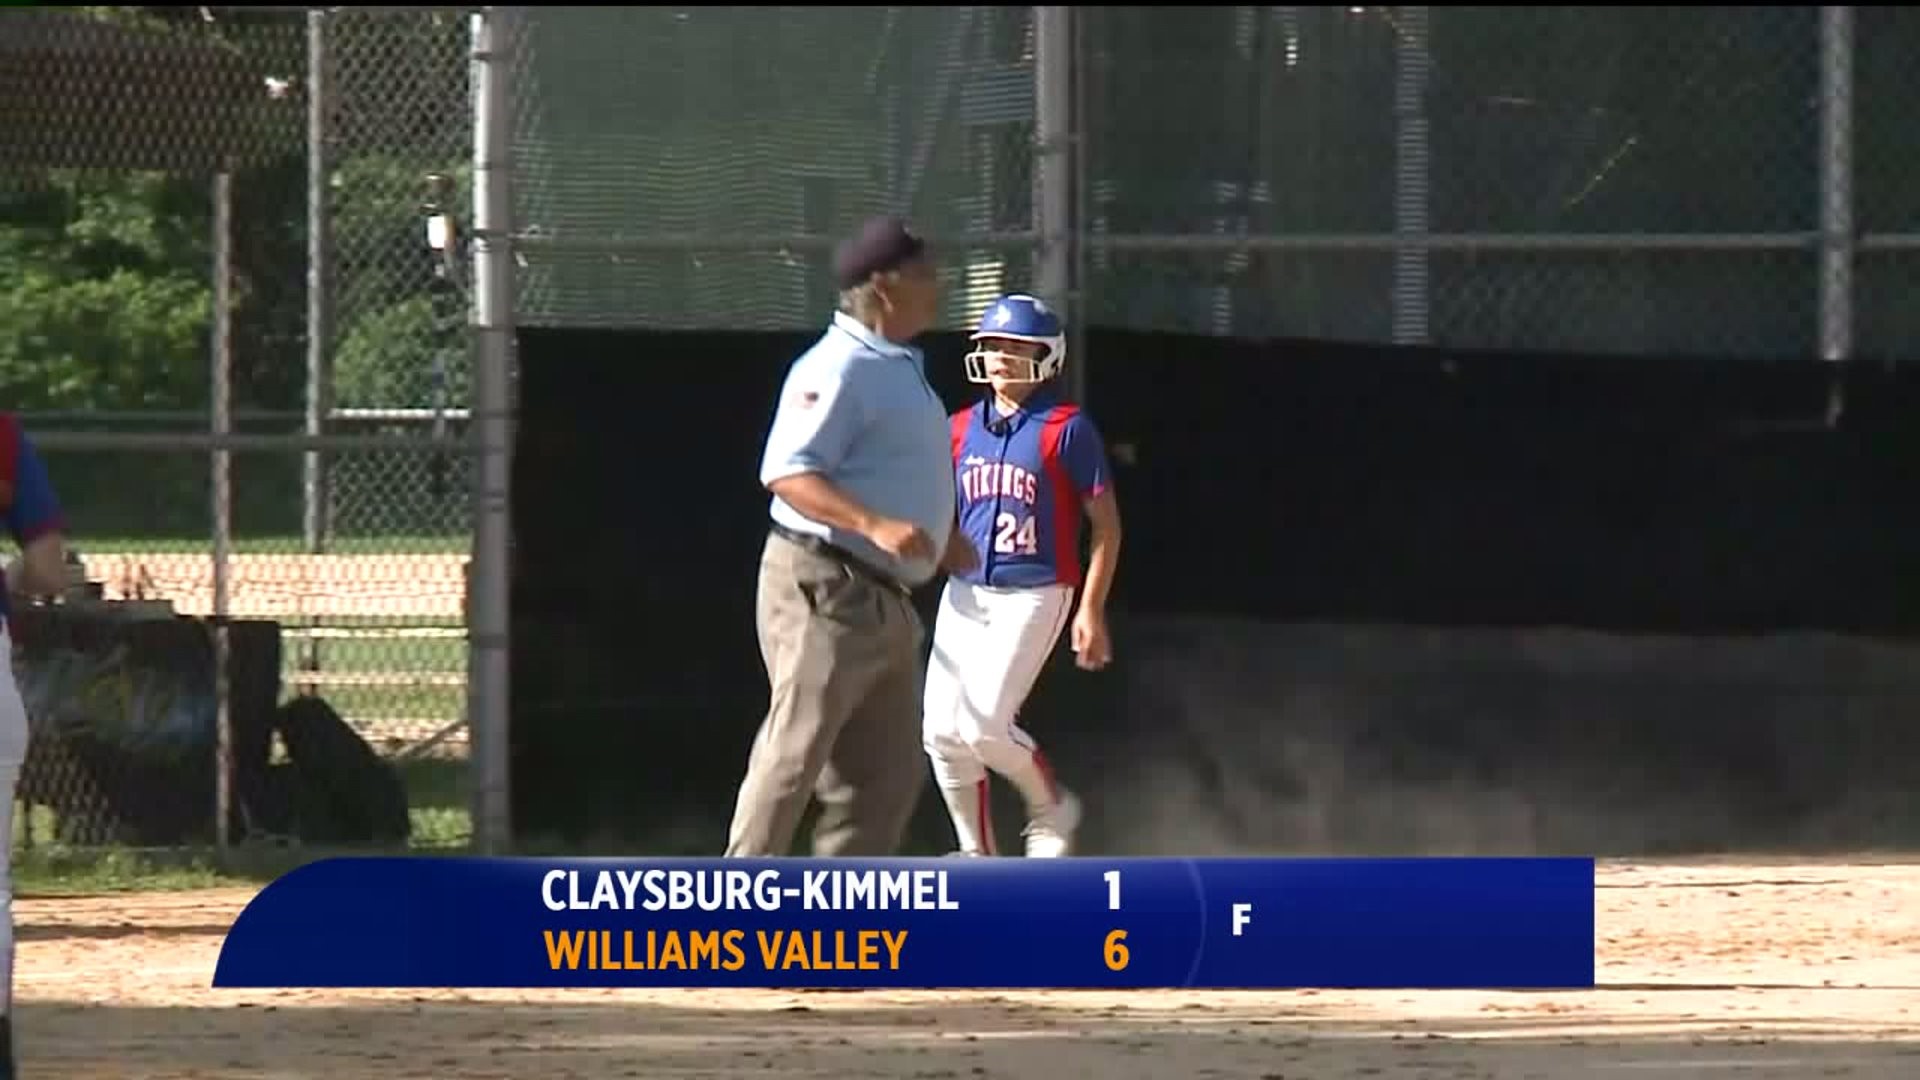 Williams Valley vs Claysburg-Kimmel softball